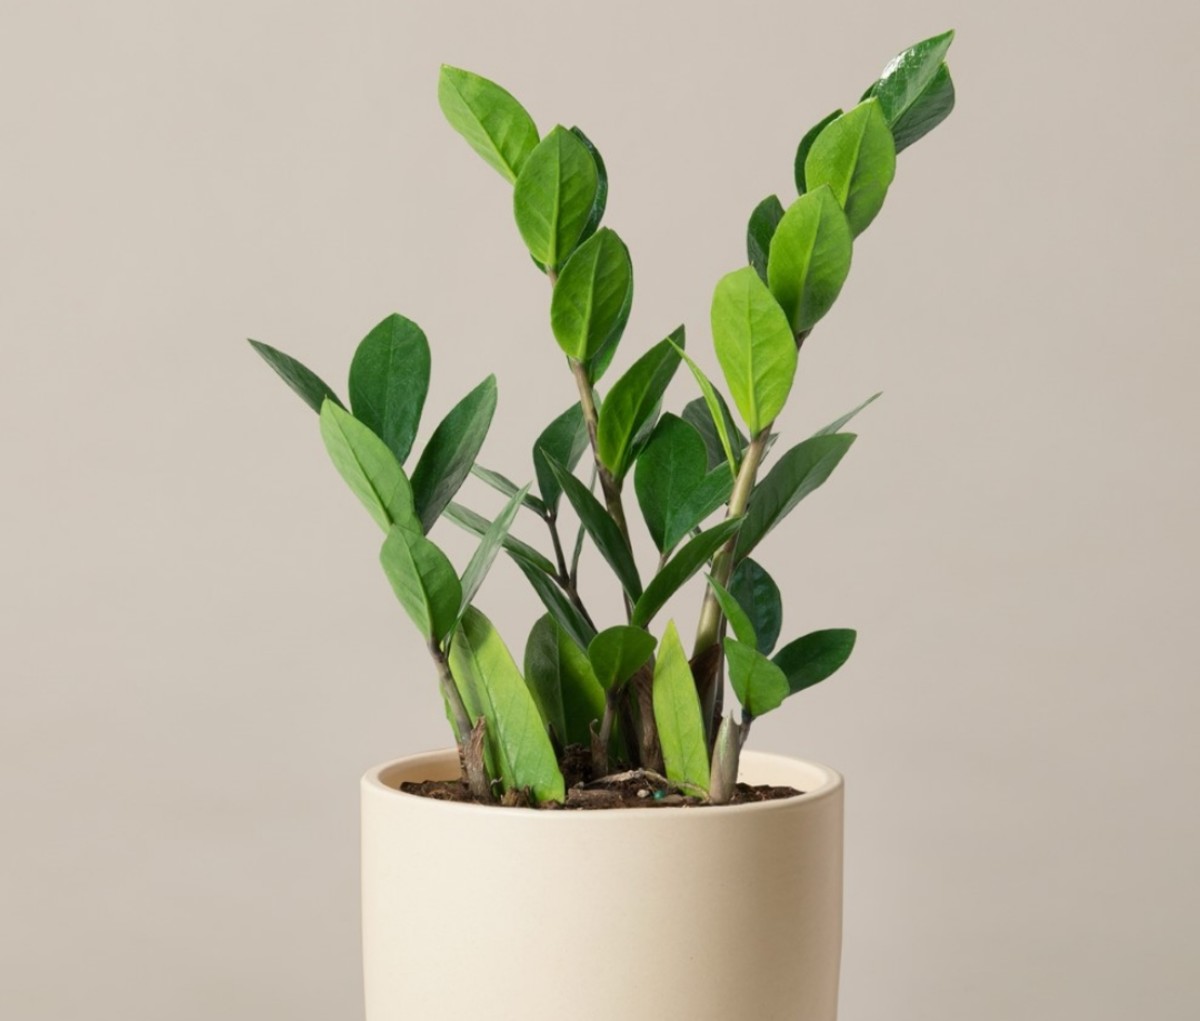 ZZ plant low-effort houseplant in a white pot